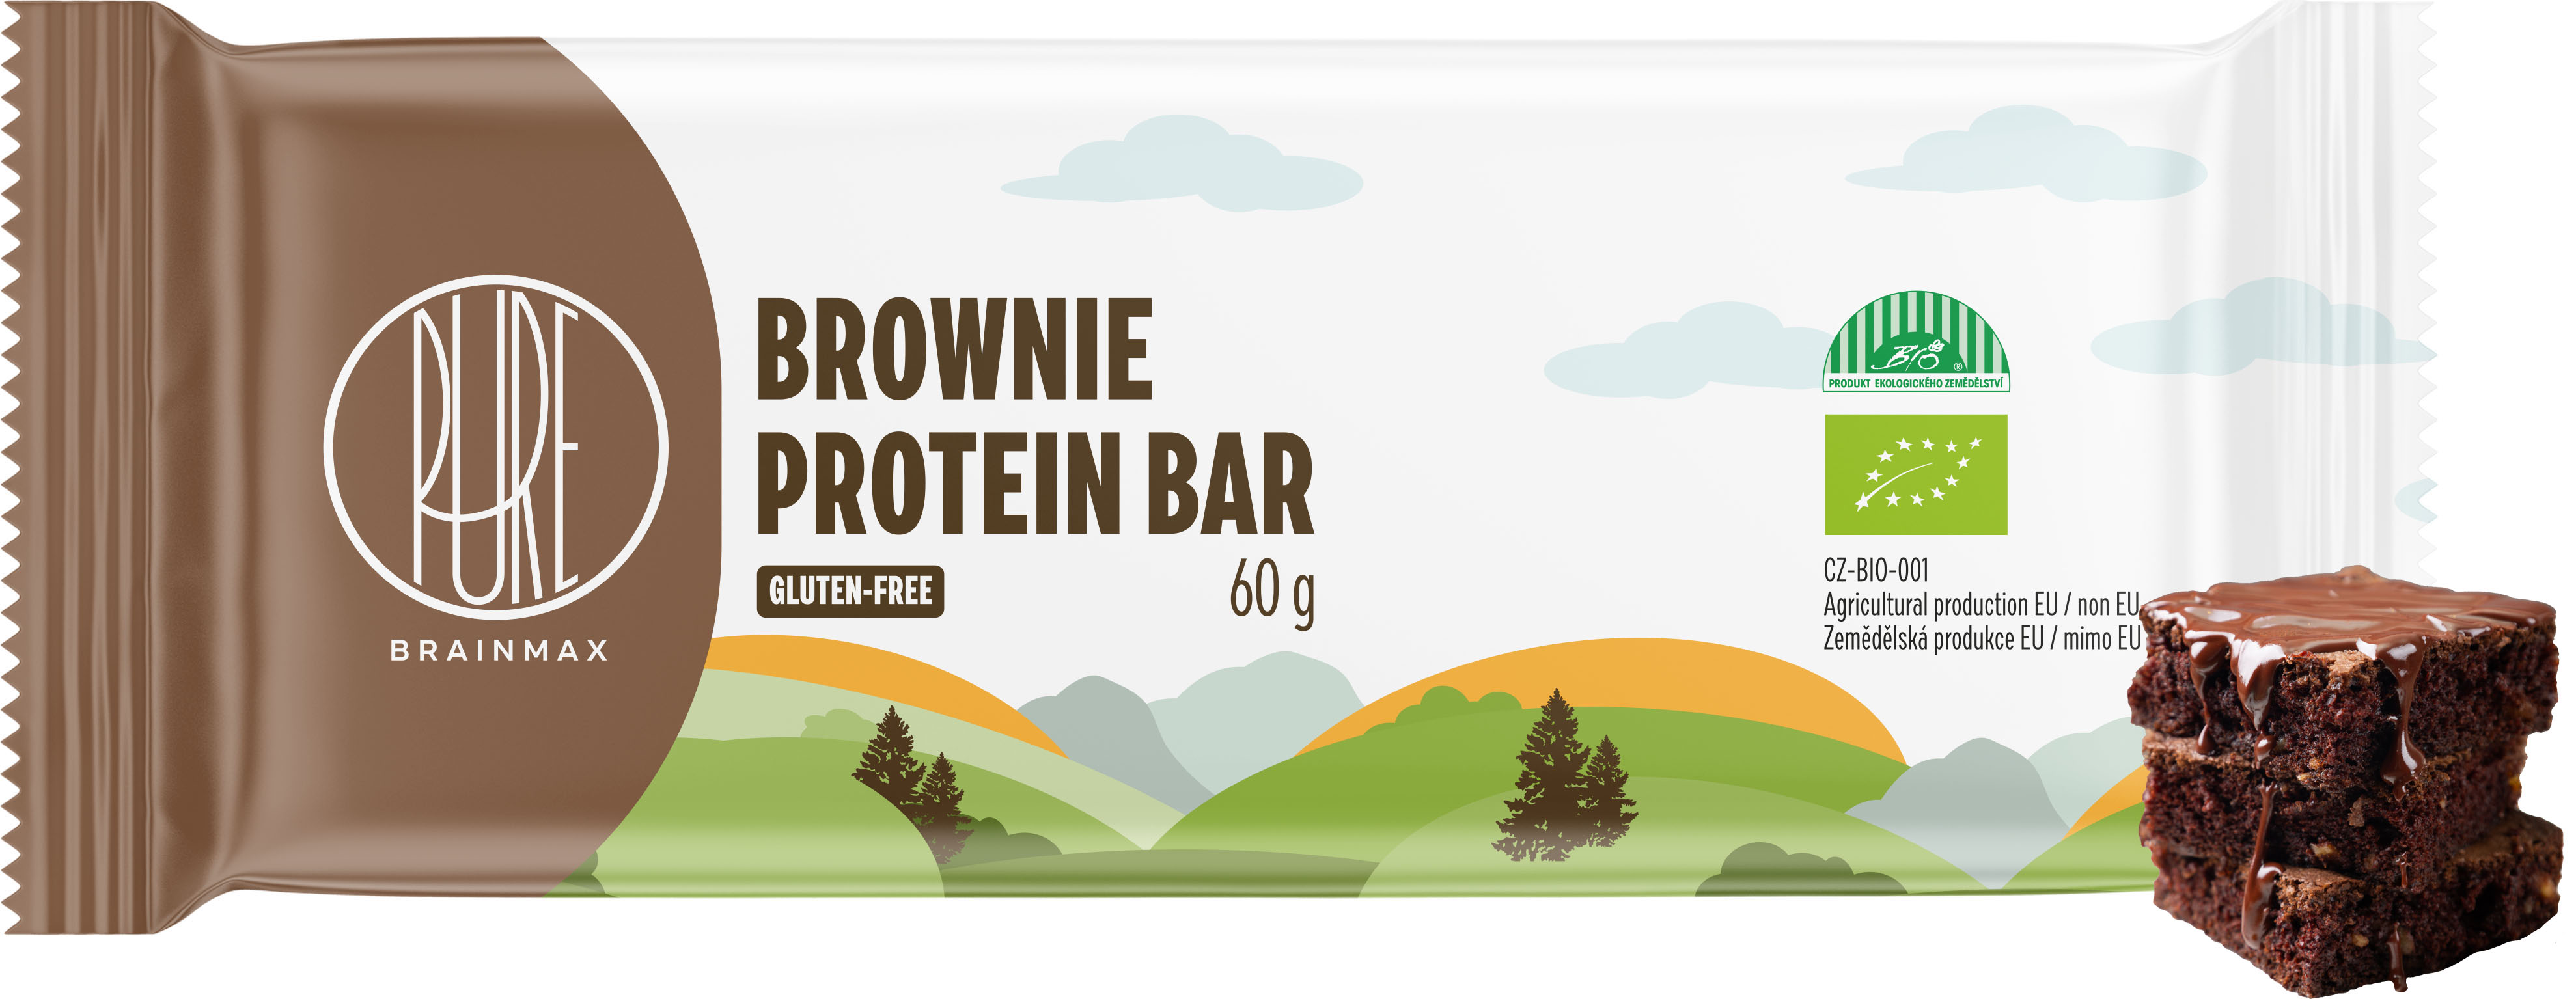 BrainMax Pure Brownie Protein Bar, Proteinová tyčinka, Brownie, BIO, 60 g Protein Bar Brownie / *CZ-BIO-001 certifikát